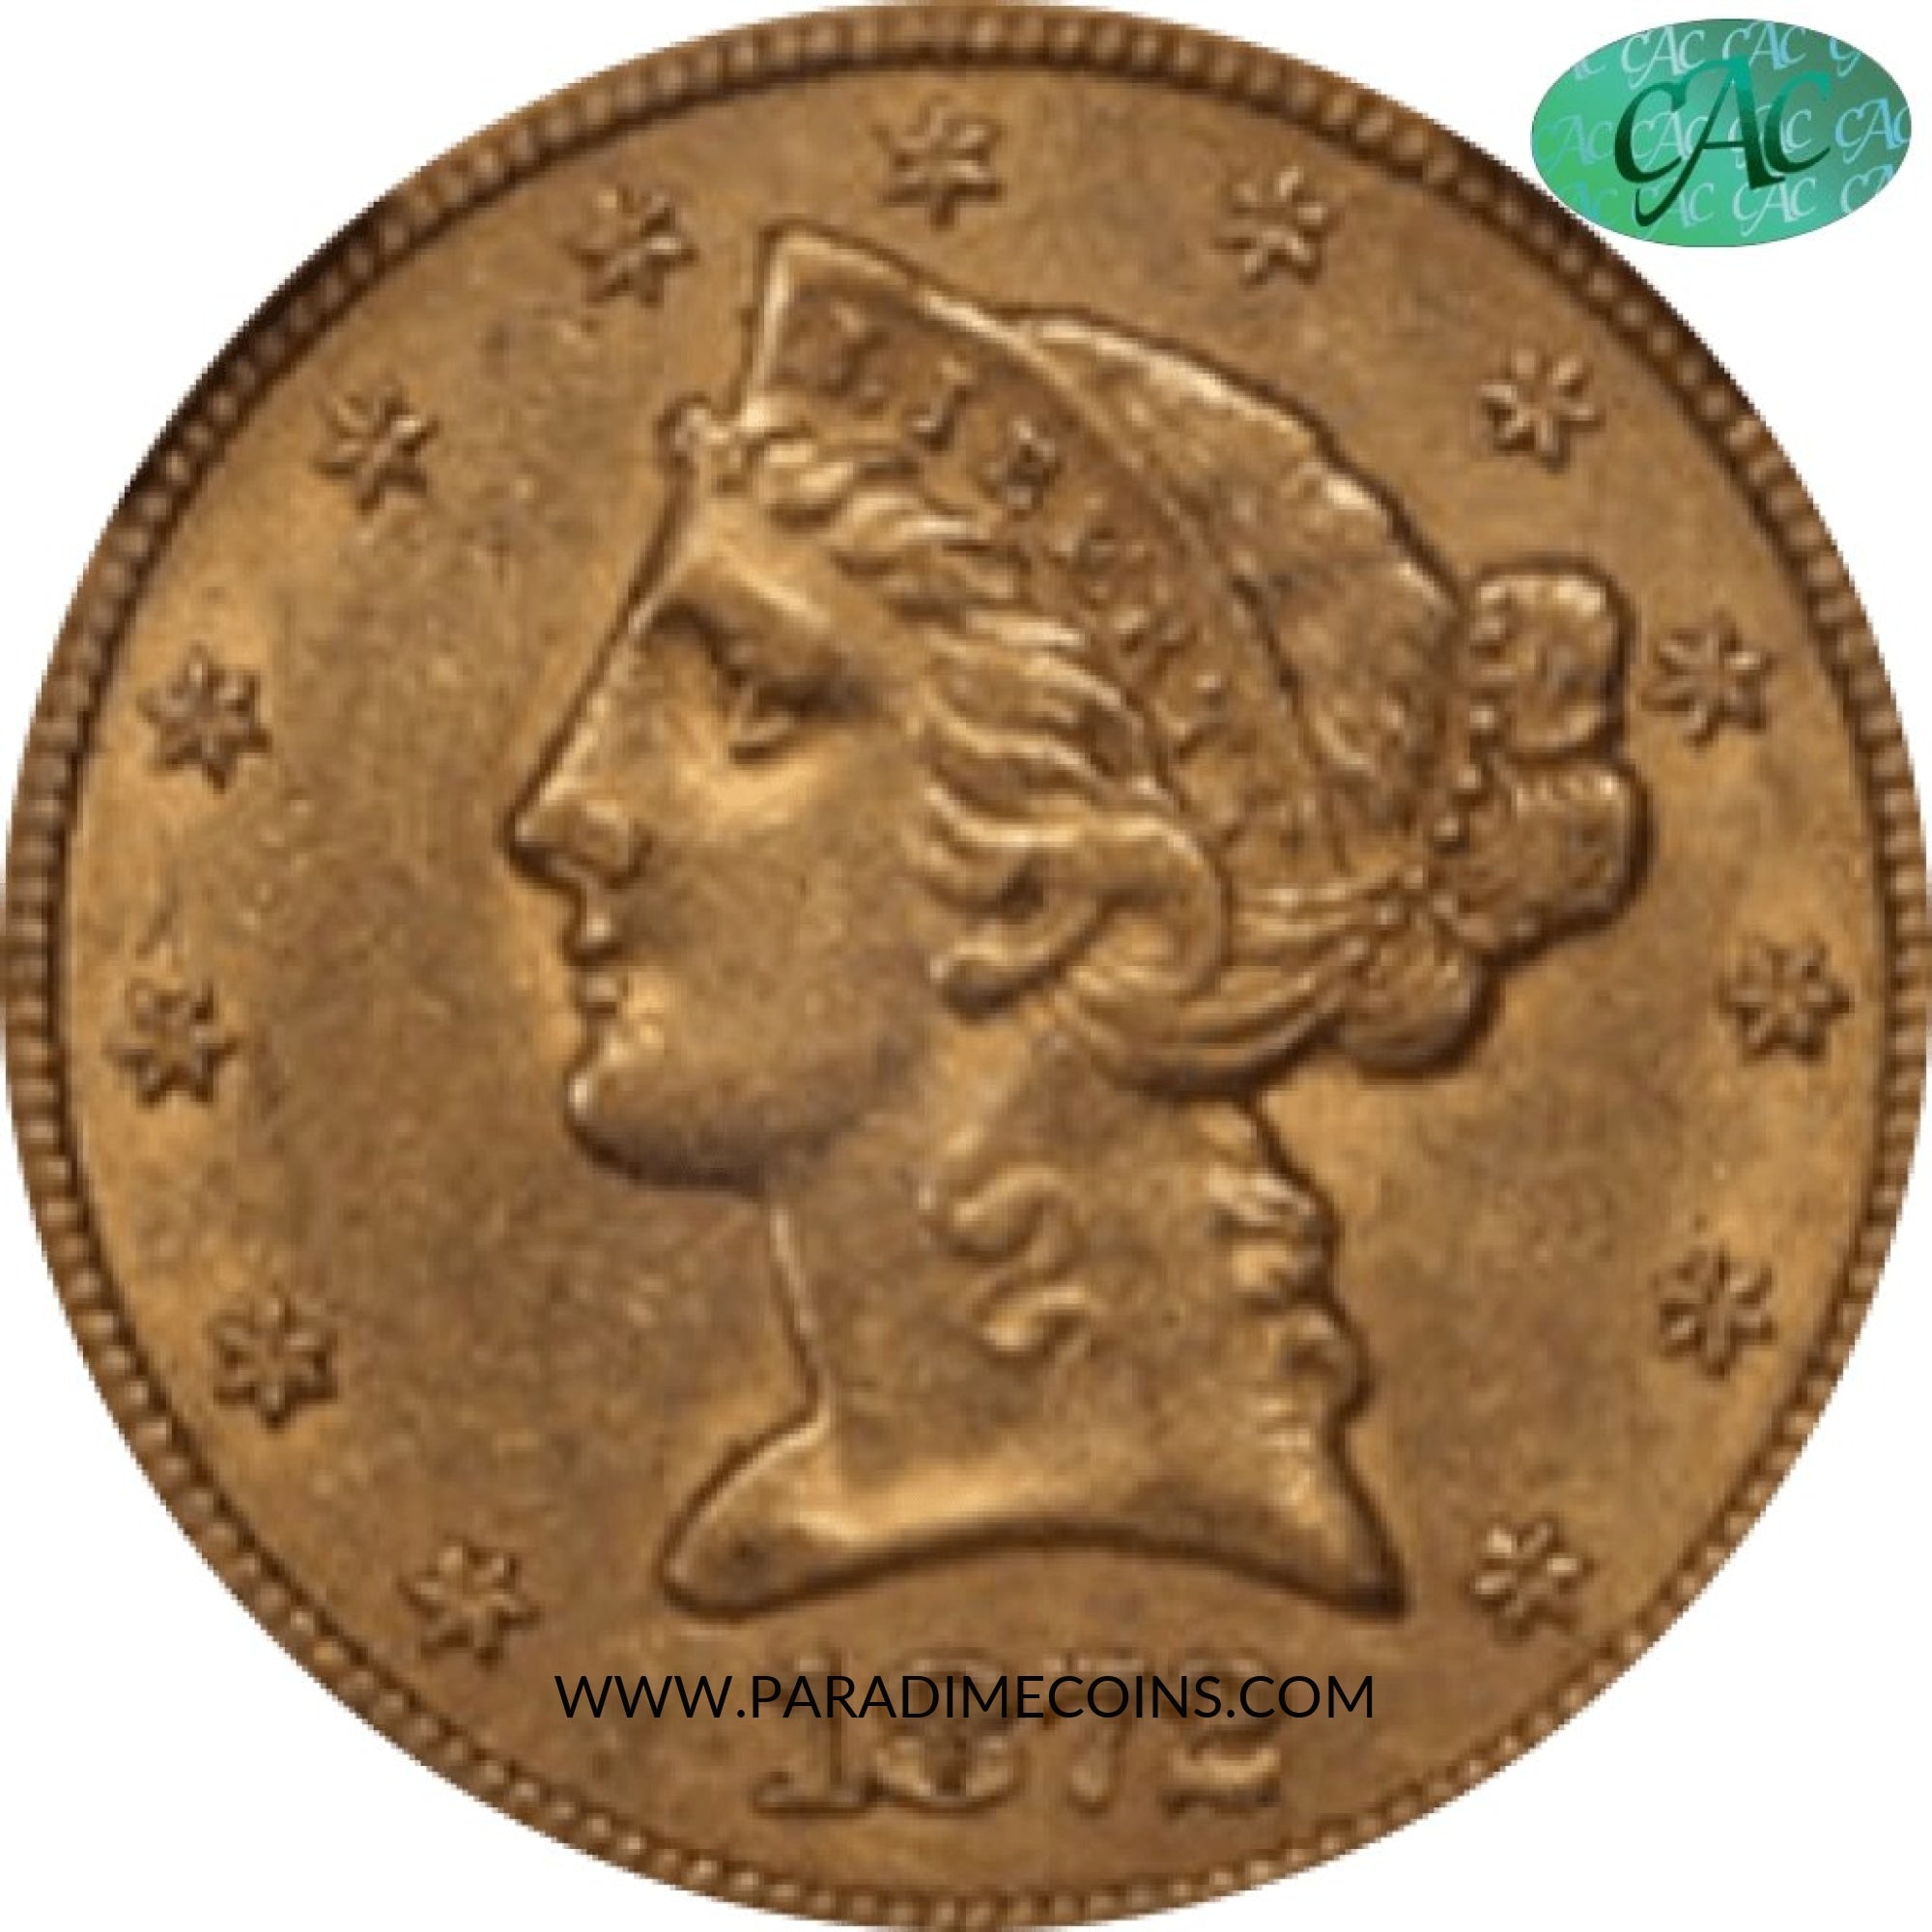 1872-CC $5 AU55 NGC CAC - Paradime Coins | PCGS NGC CACG CAC Rare US Numismatic Coins For Sale